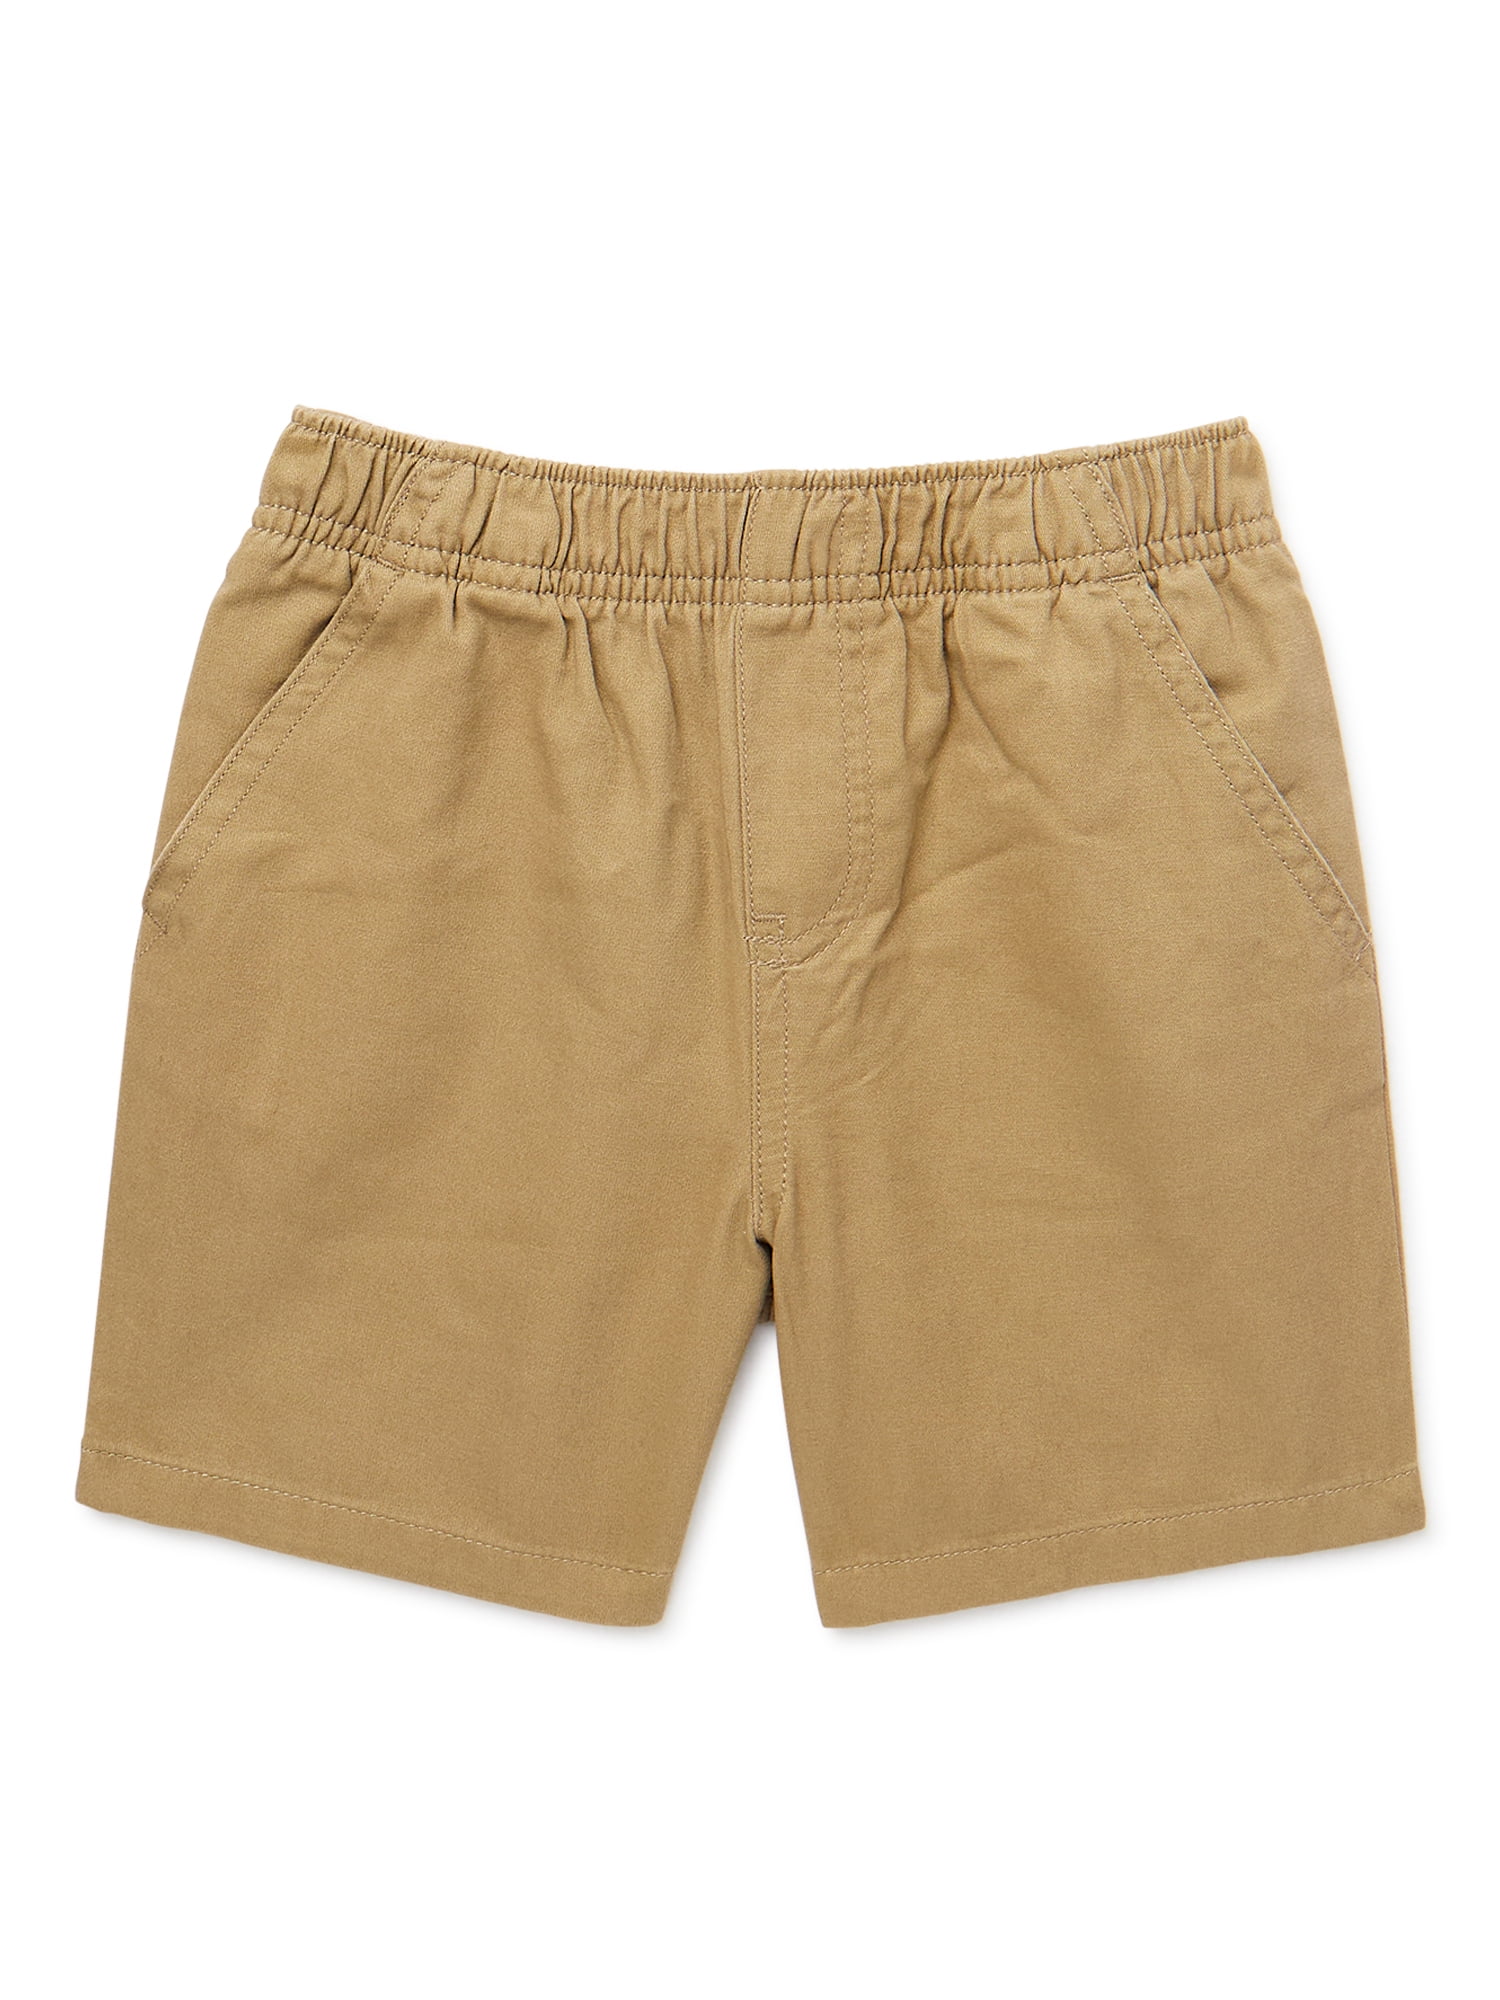 Garanimals Toddler Boy Woven Shorts, Sizes 18M-5T - Walmart.com